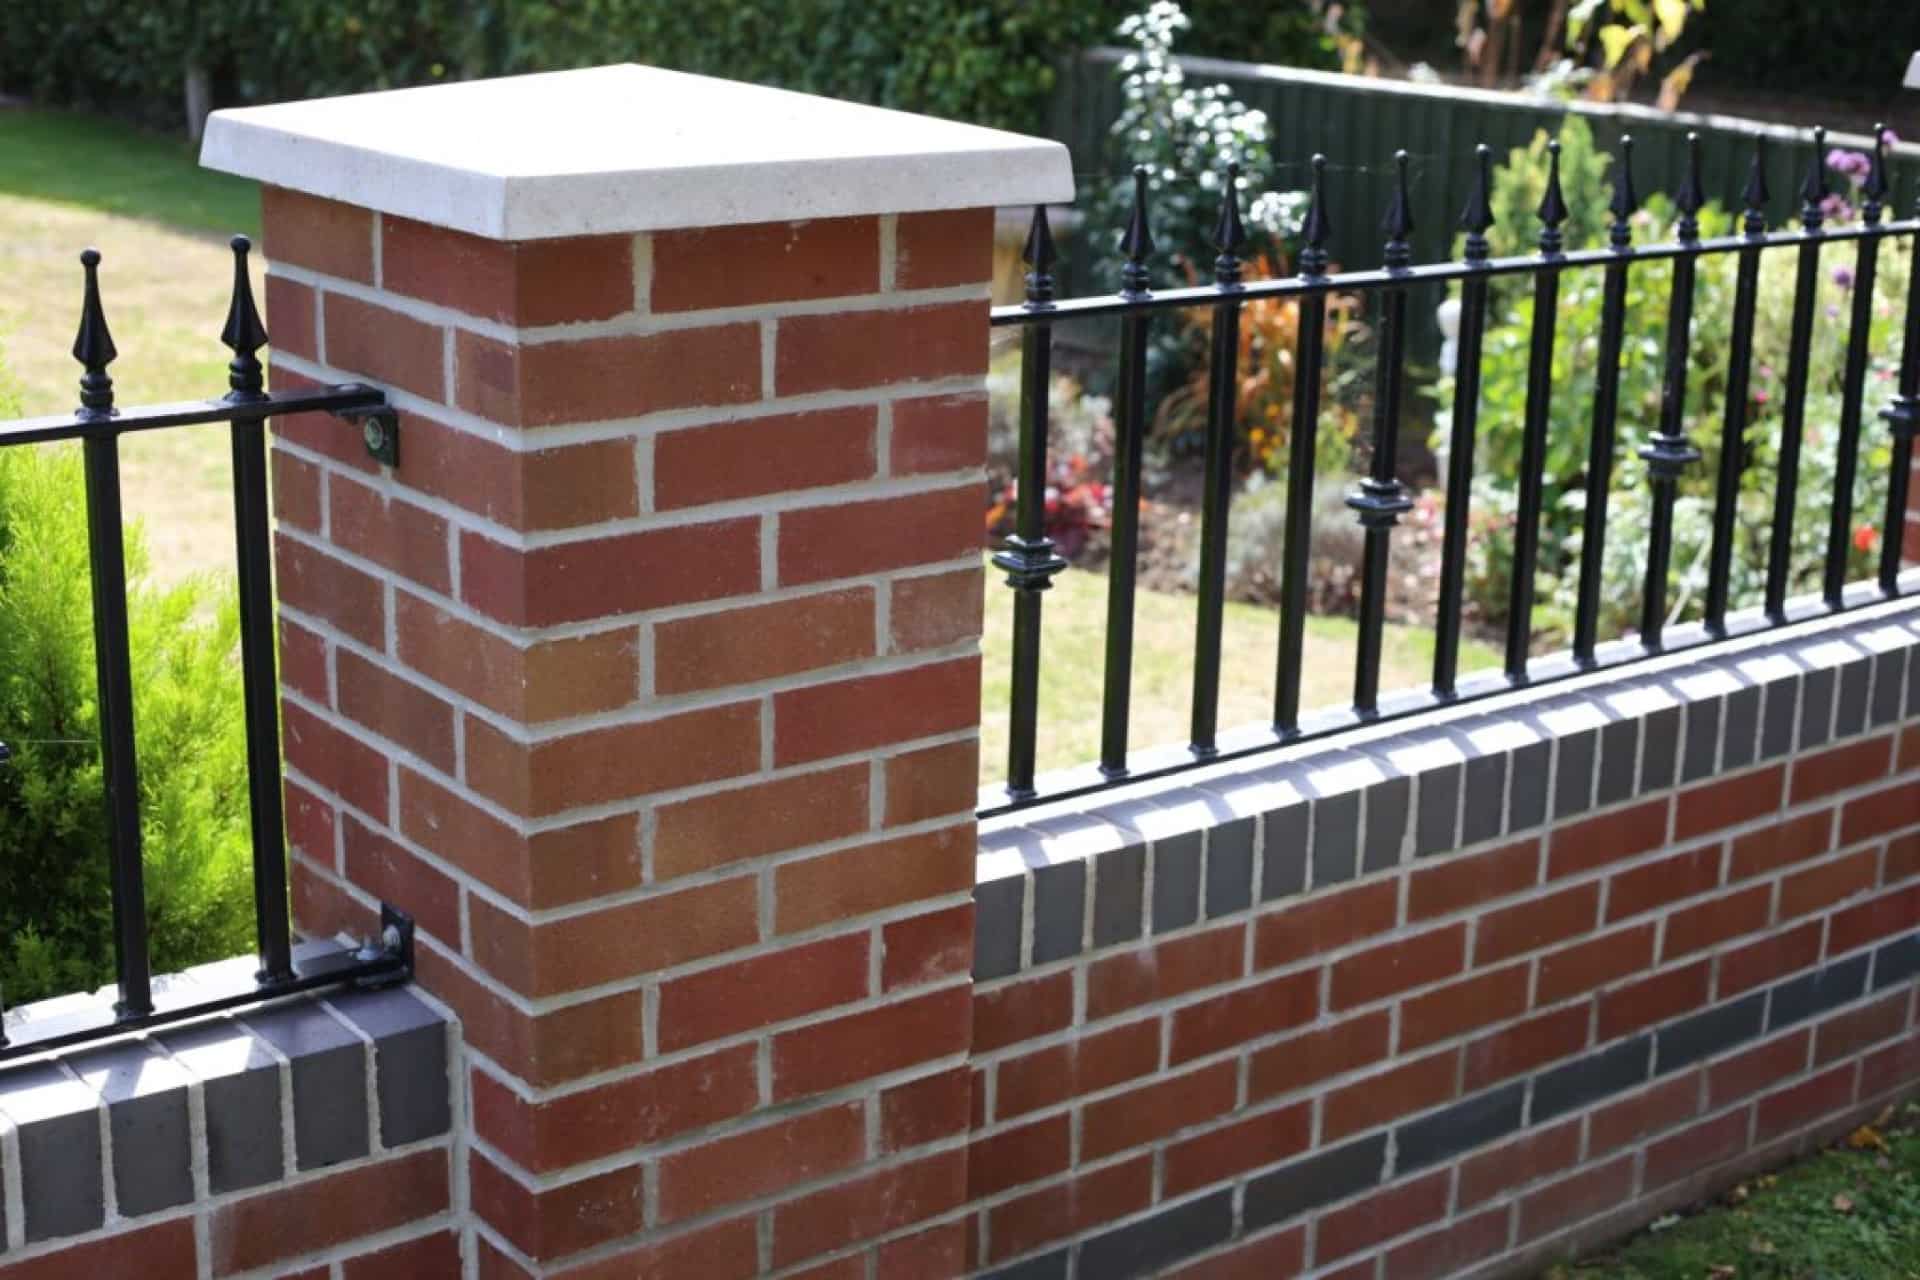 Quality Trowbridge Brickwork & Walls company